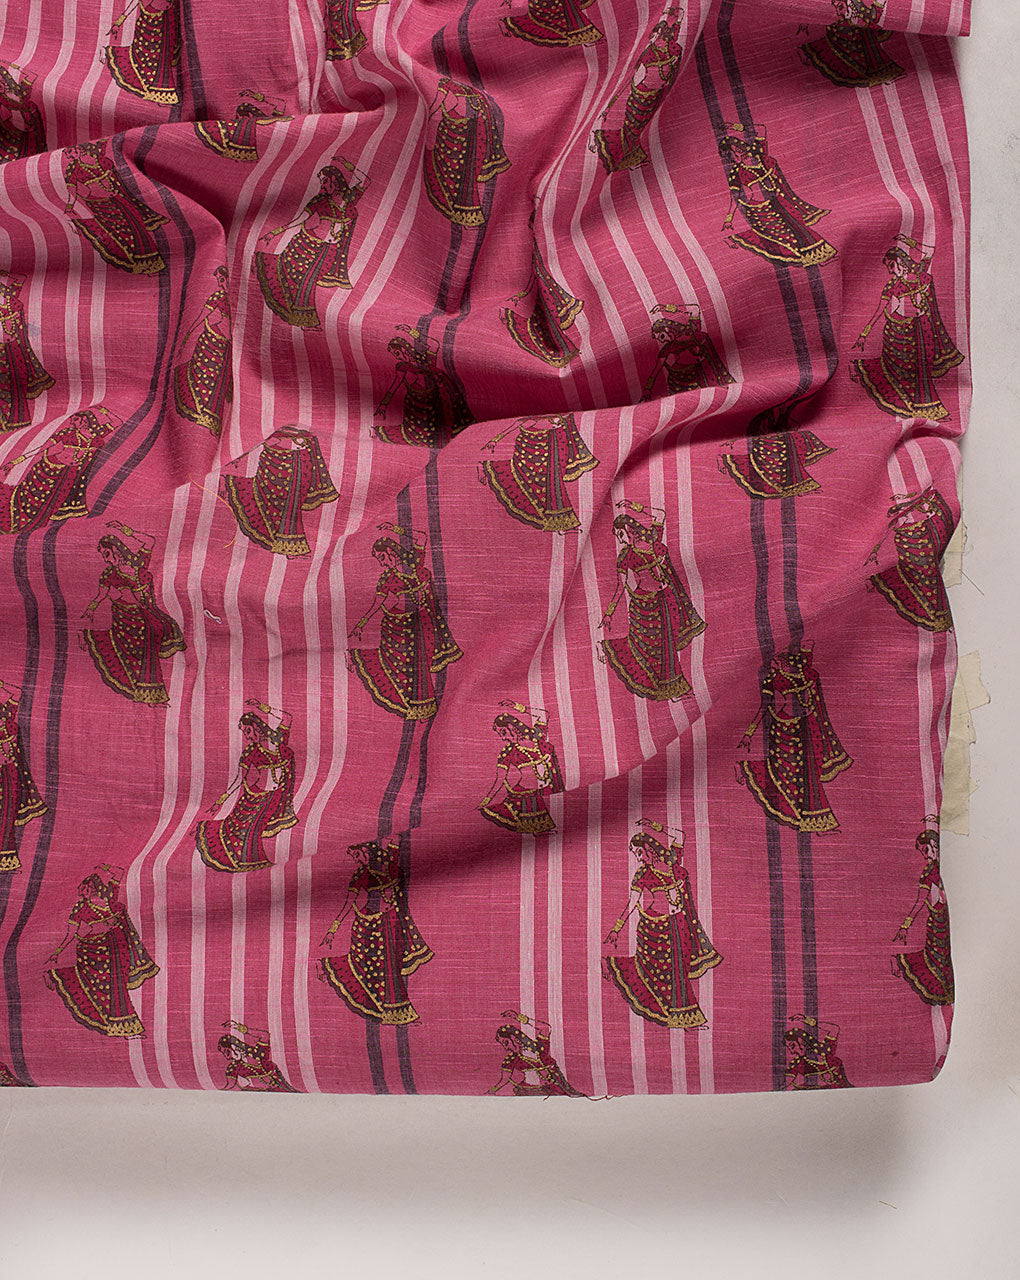 Foil Screen Print Loom Textured Cotton Fabric